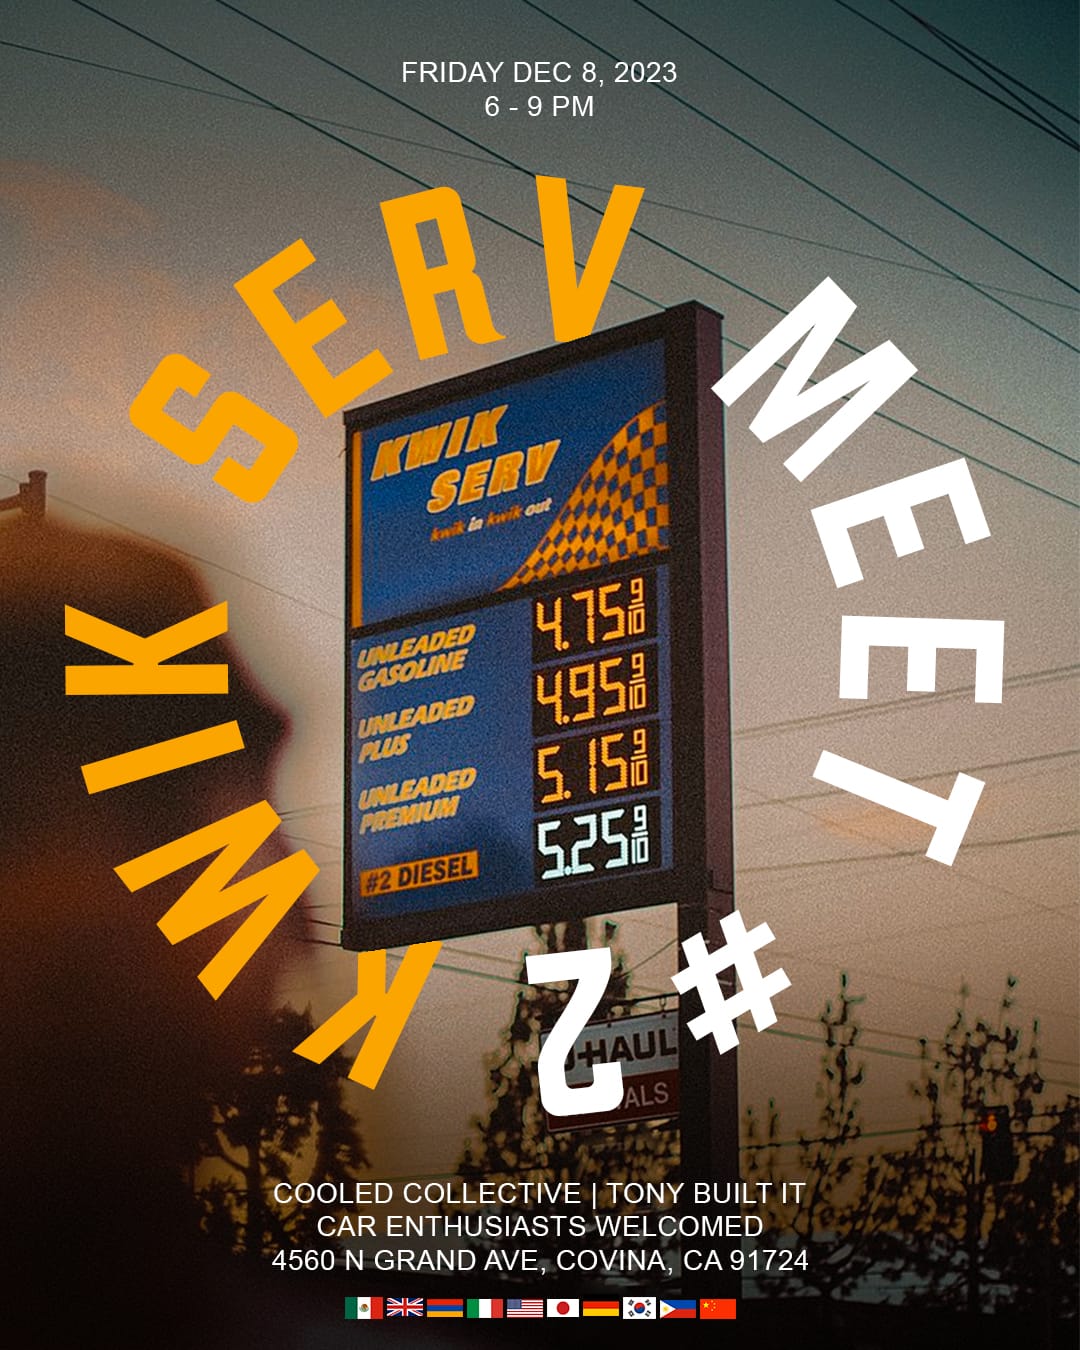 Kwik Serv Gas Station Meet #2